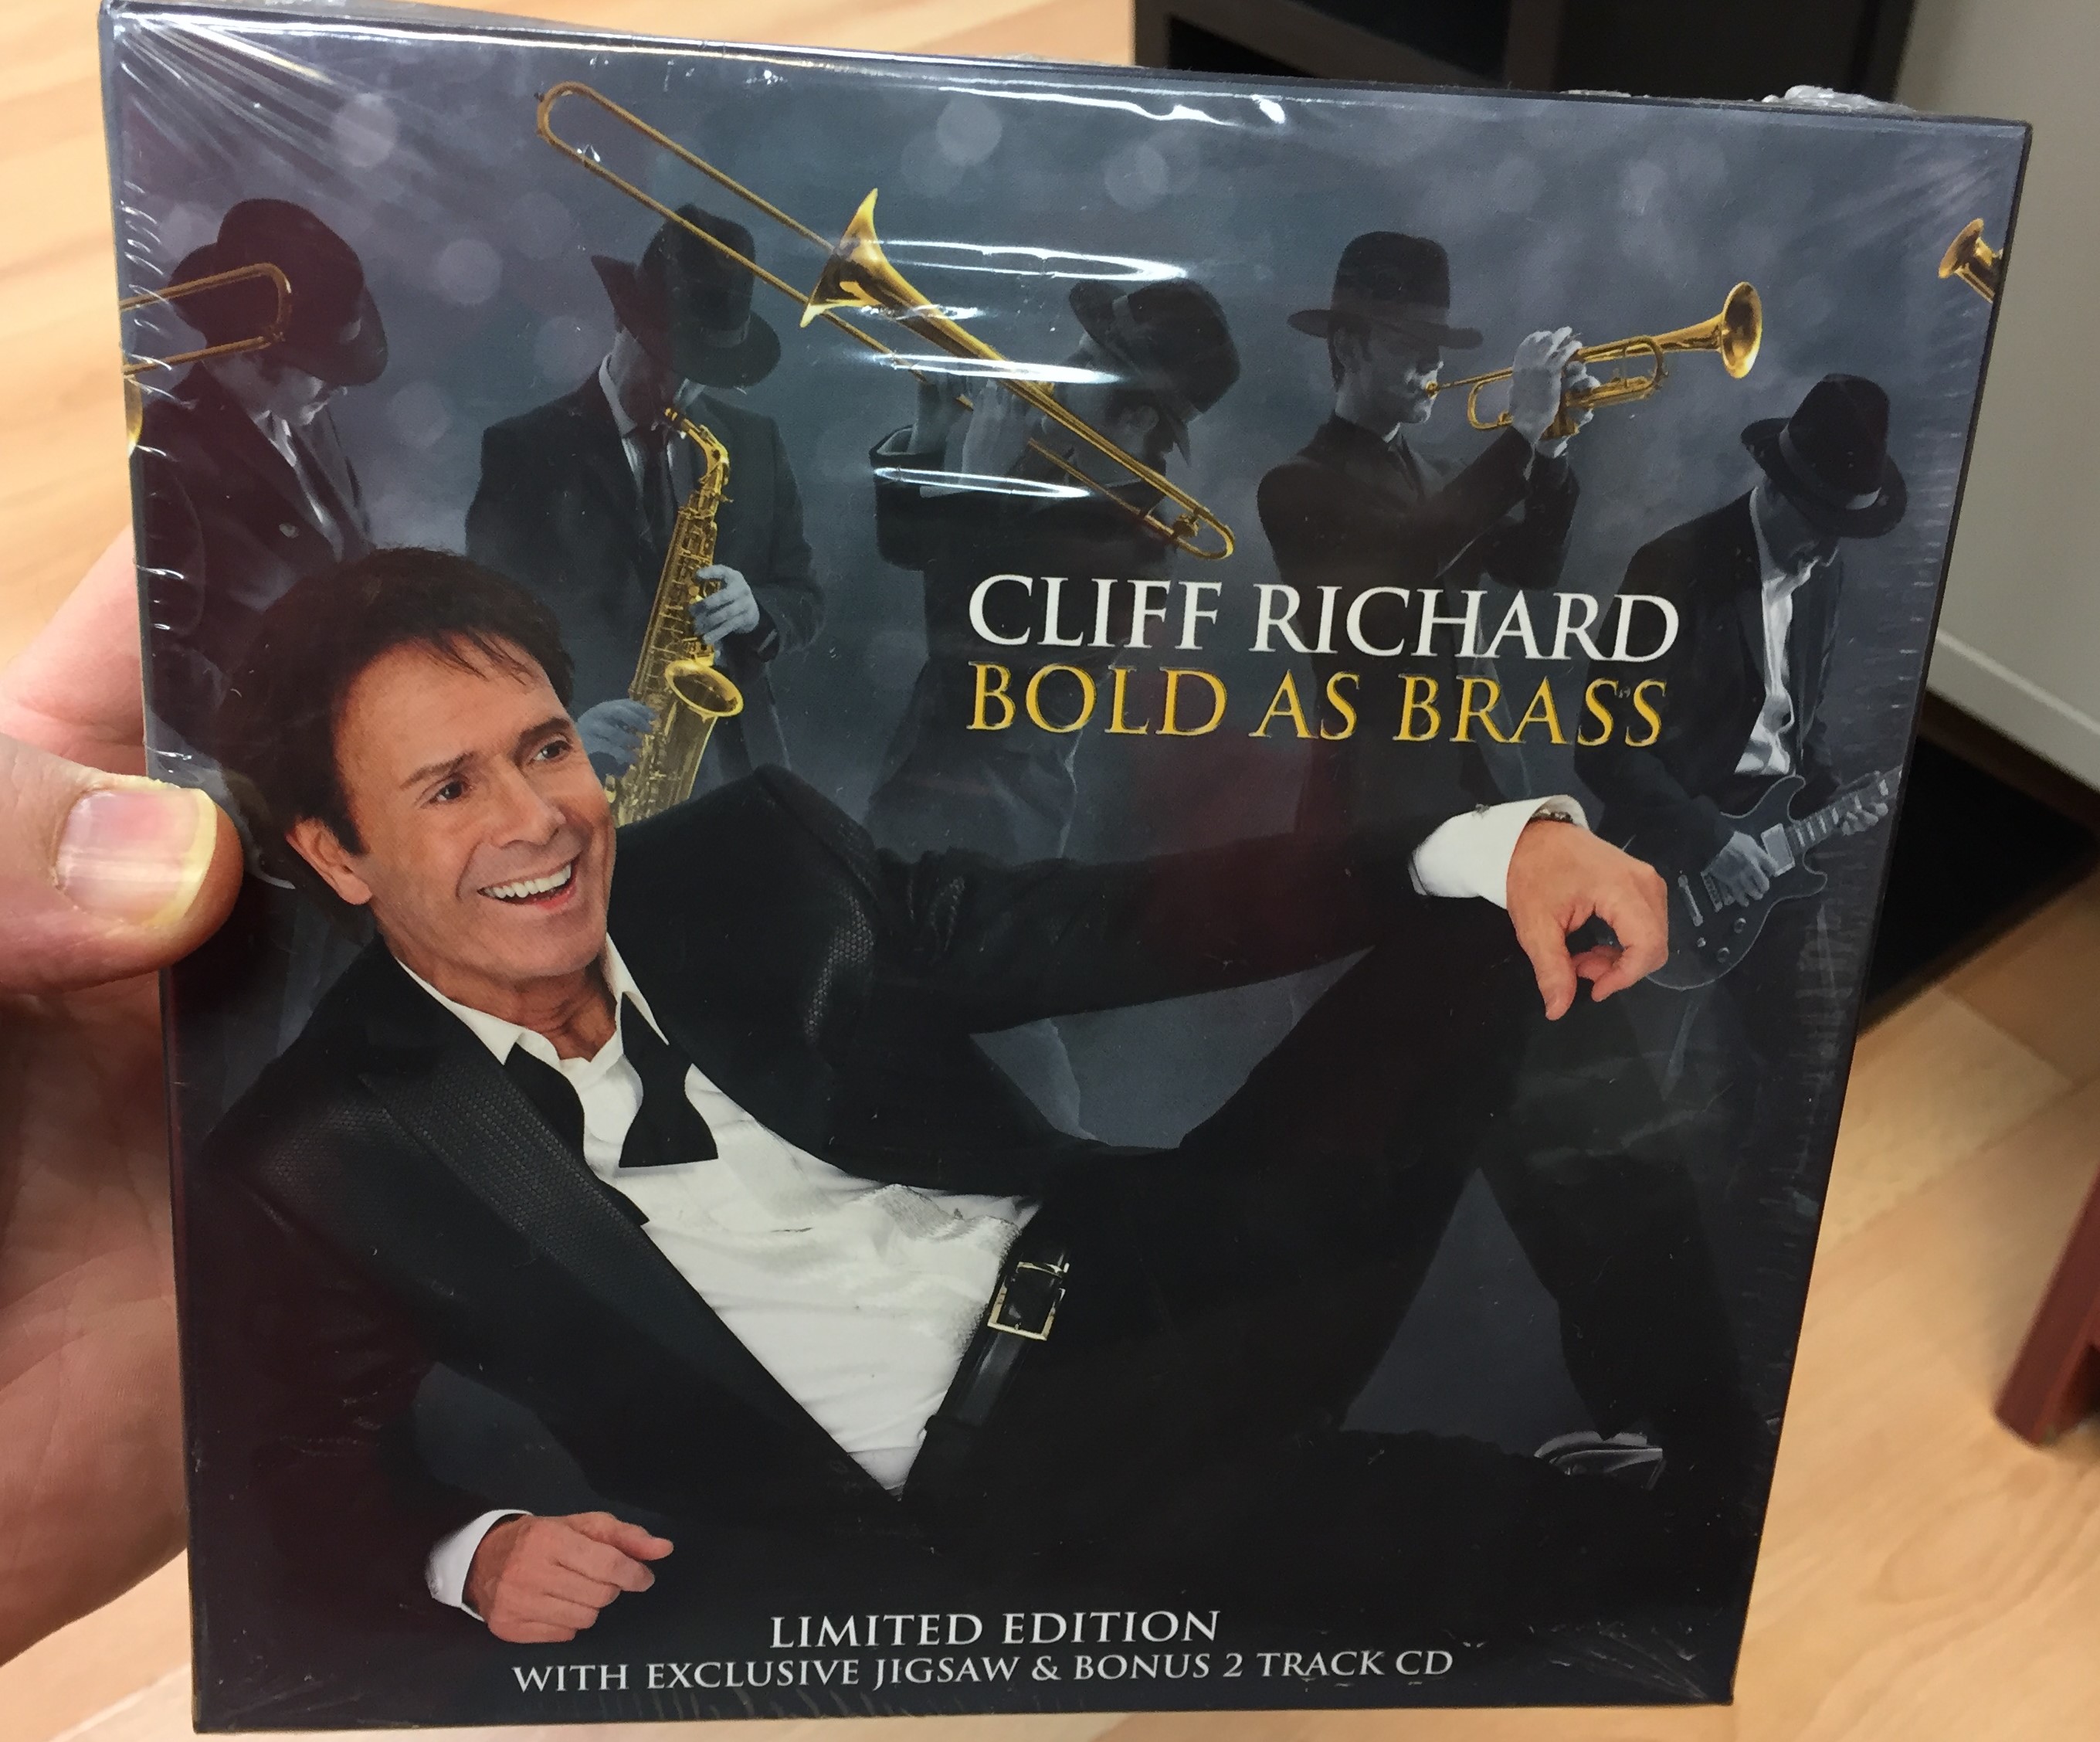 Cliff Richard - Bold as Brass - Limited edition 1.JPG